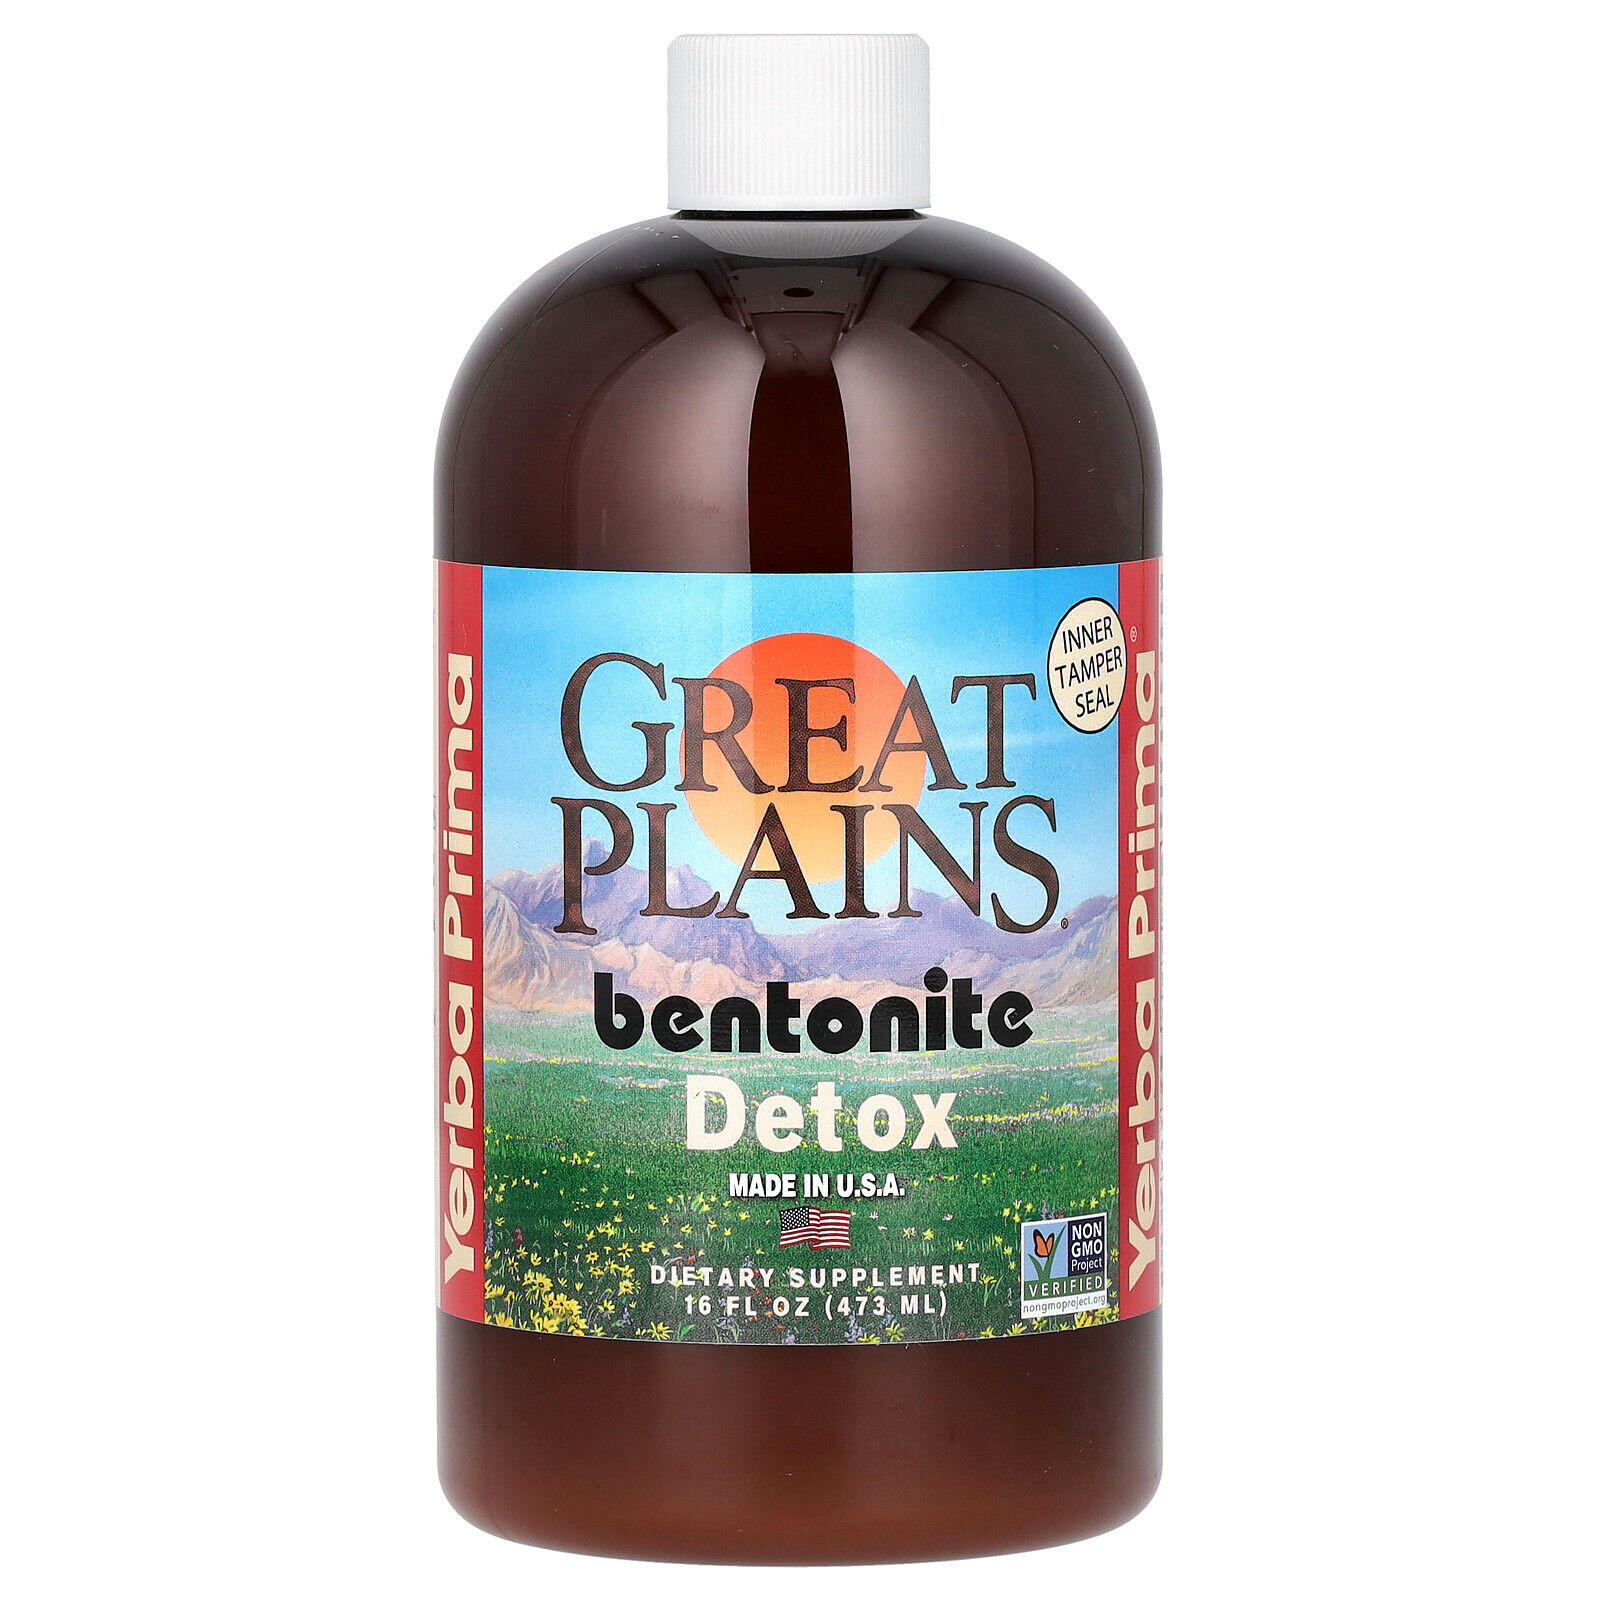 Great Plains, Bentonite, Detox, 16 fl oz (473 ml)